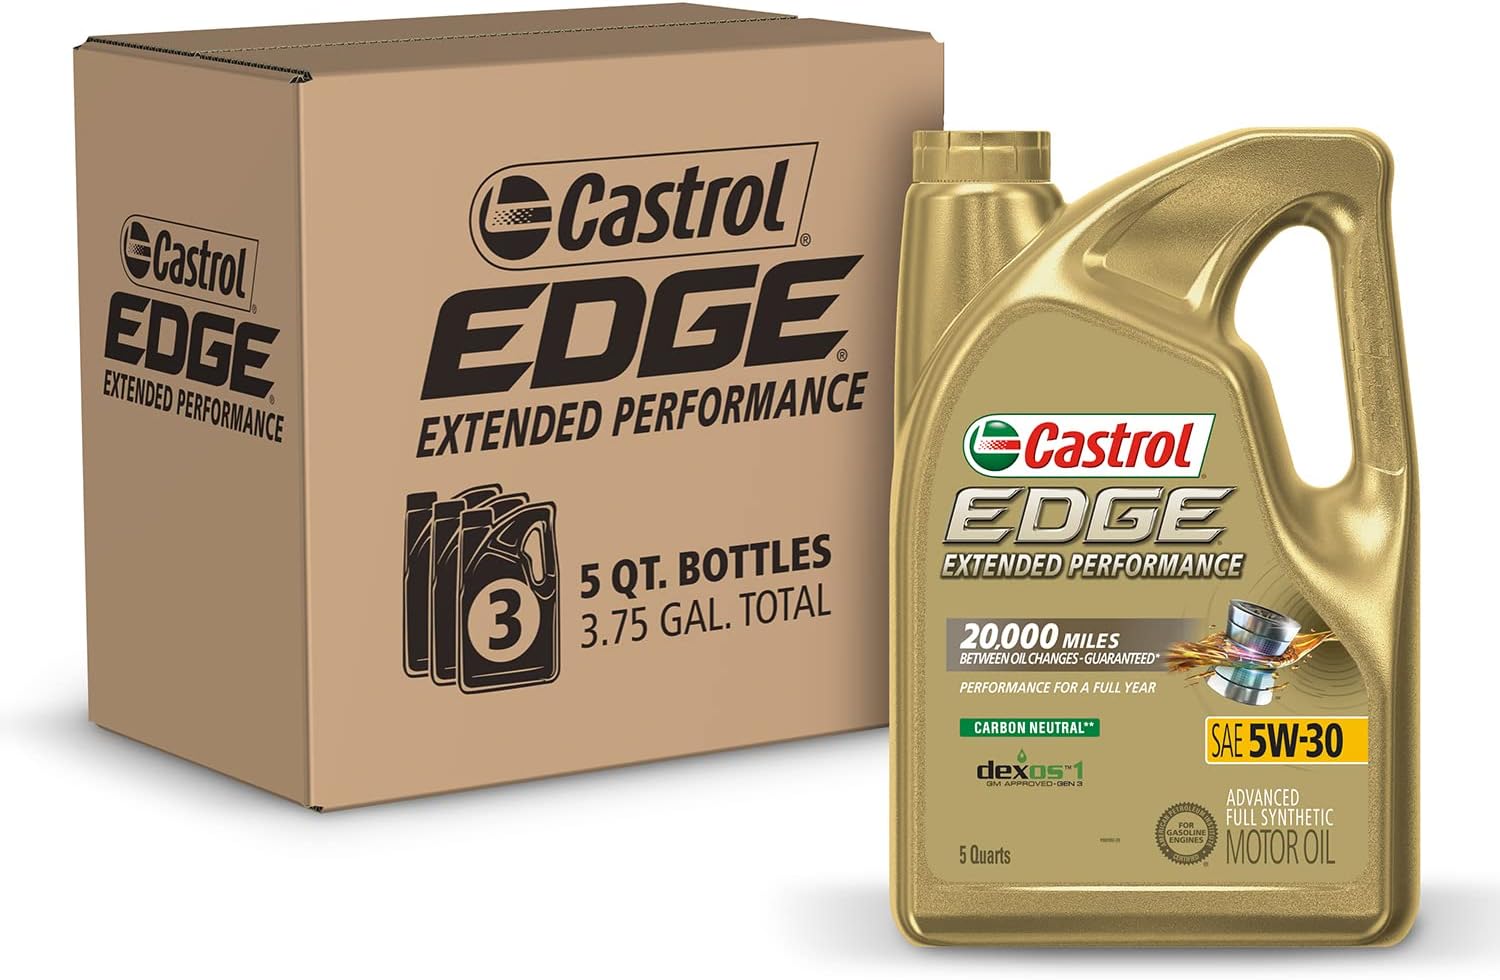 Castrol Edge 5W-30 LL Motor Oil, Advanced Full Synthetic, 5 Quarts